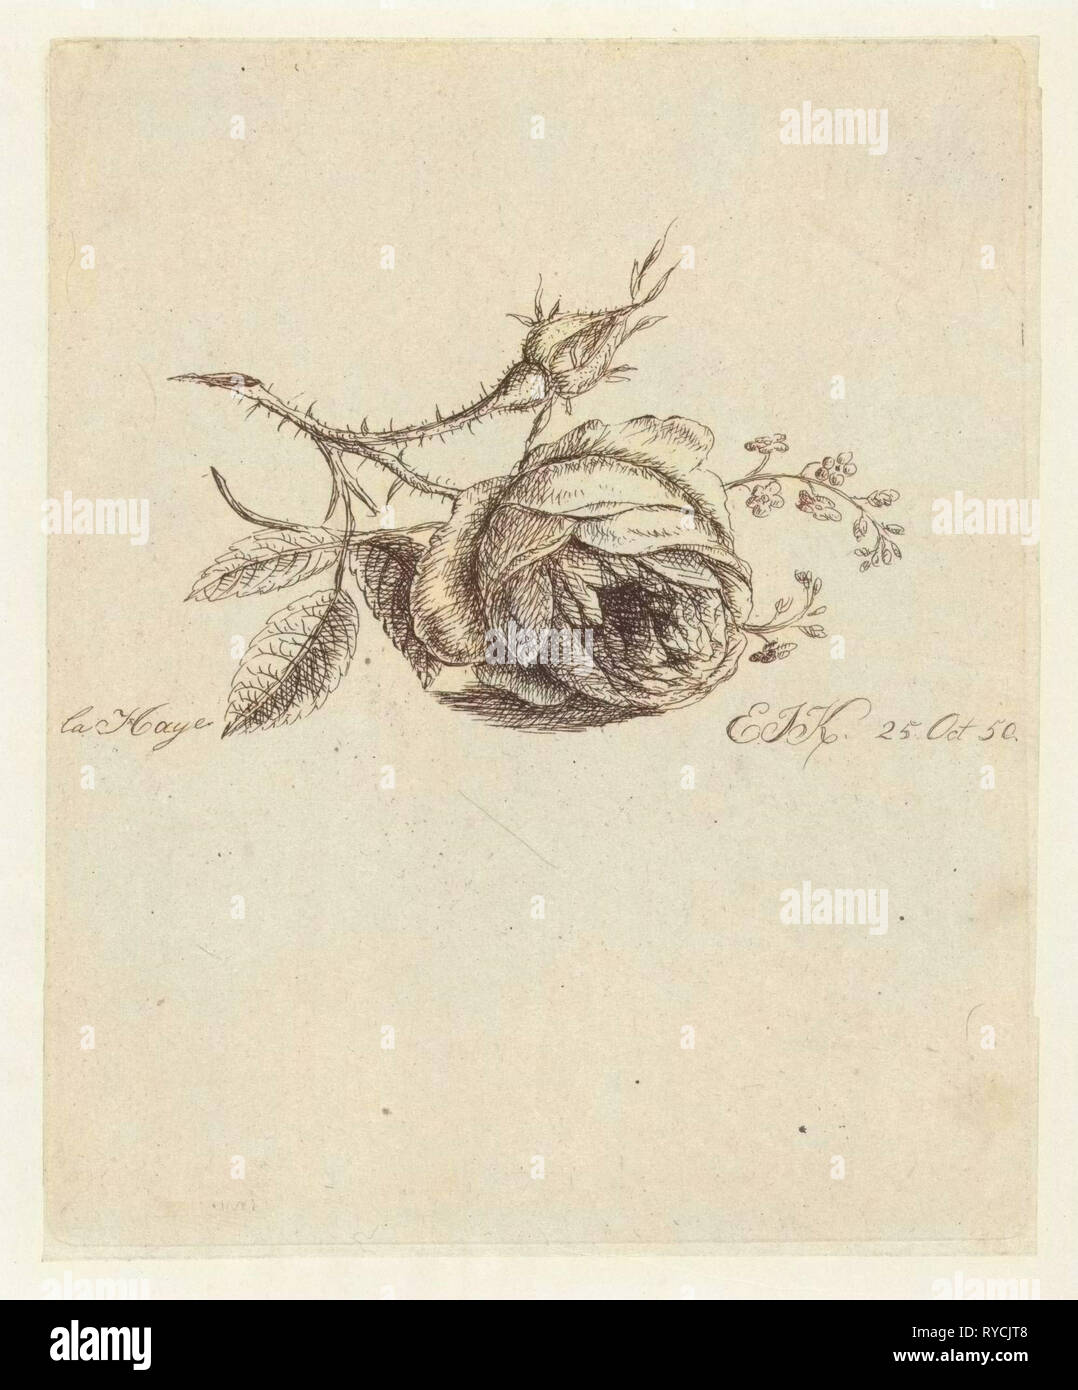 Una rosa e dimenticare-me-middlesbrough, Elisabeth Johanna Koning, 1850 Foto Stock